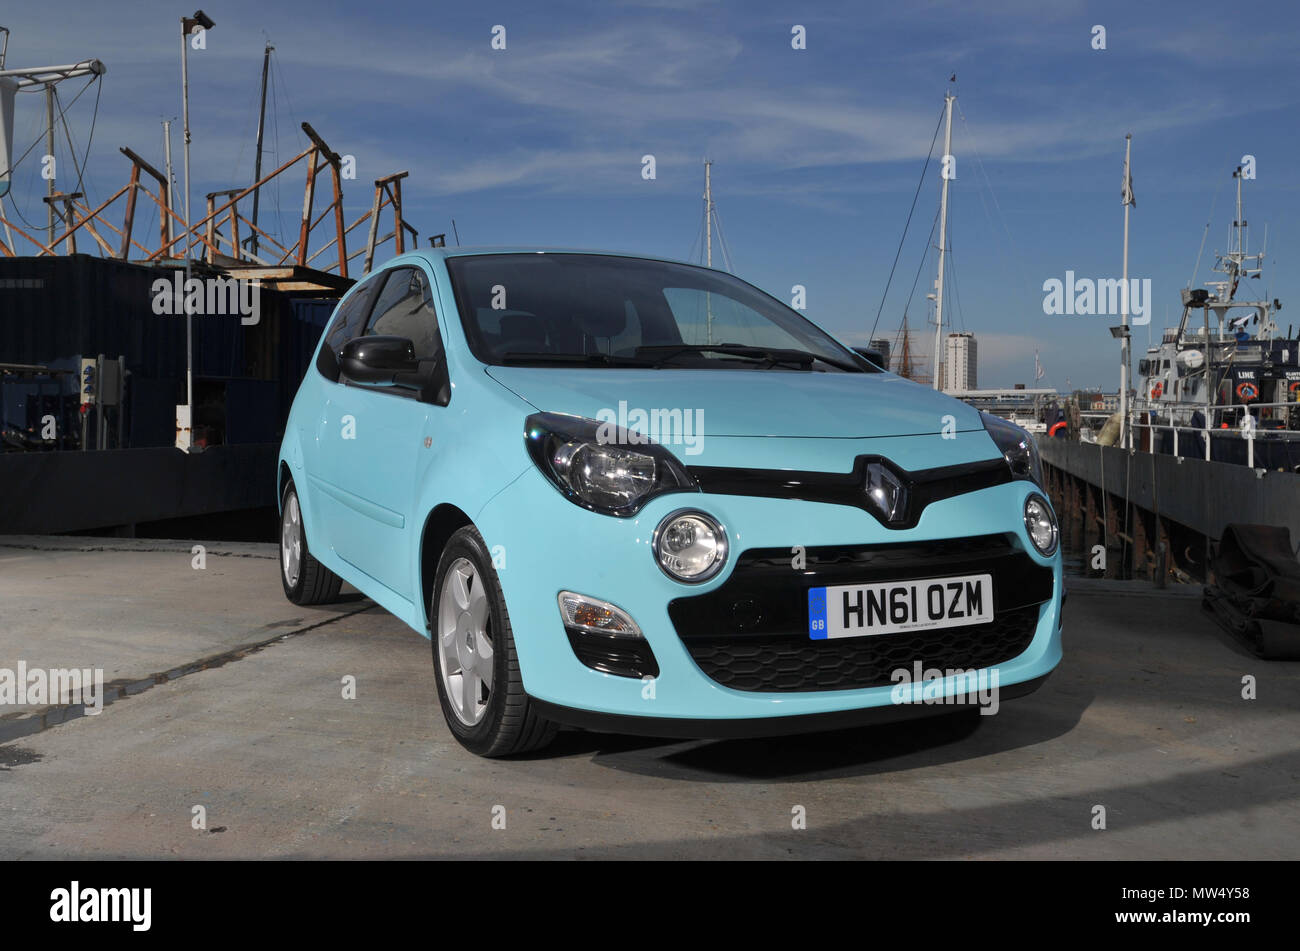 2012 Renault Twingo French city car Stock Photo